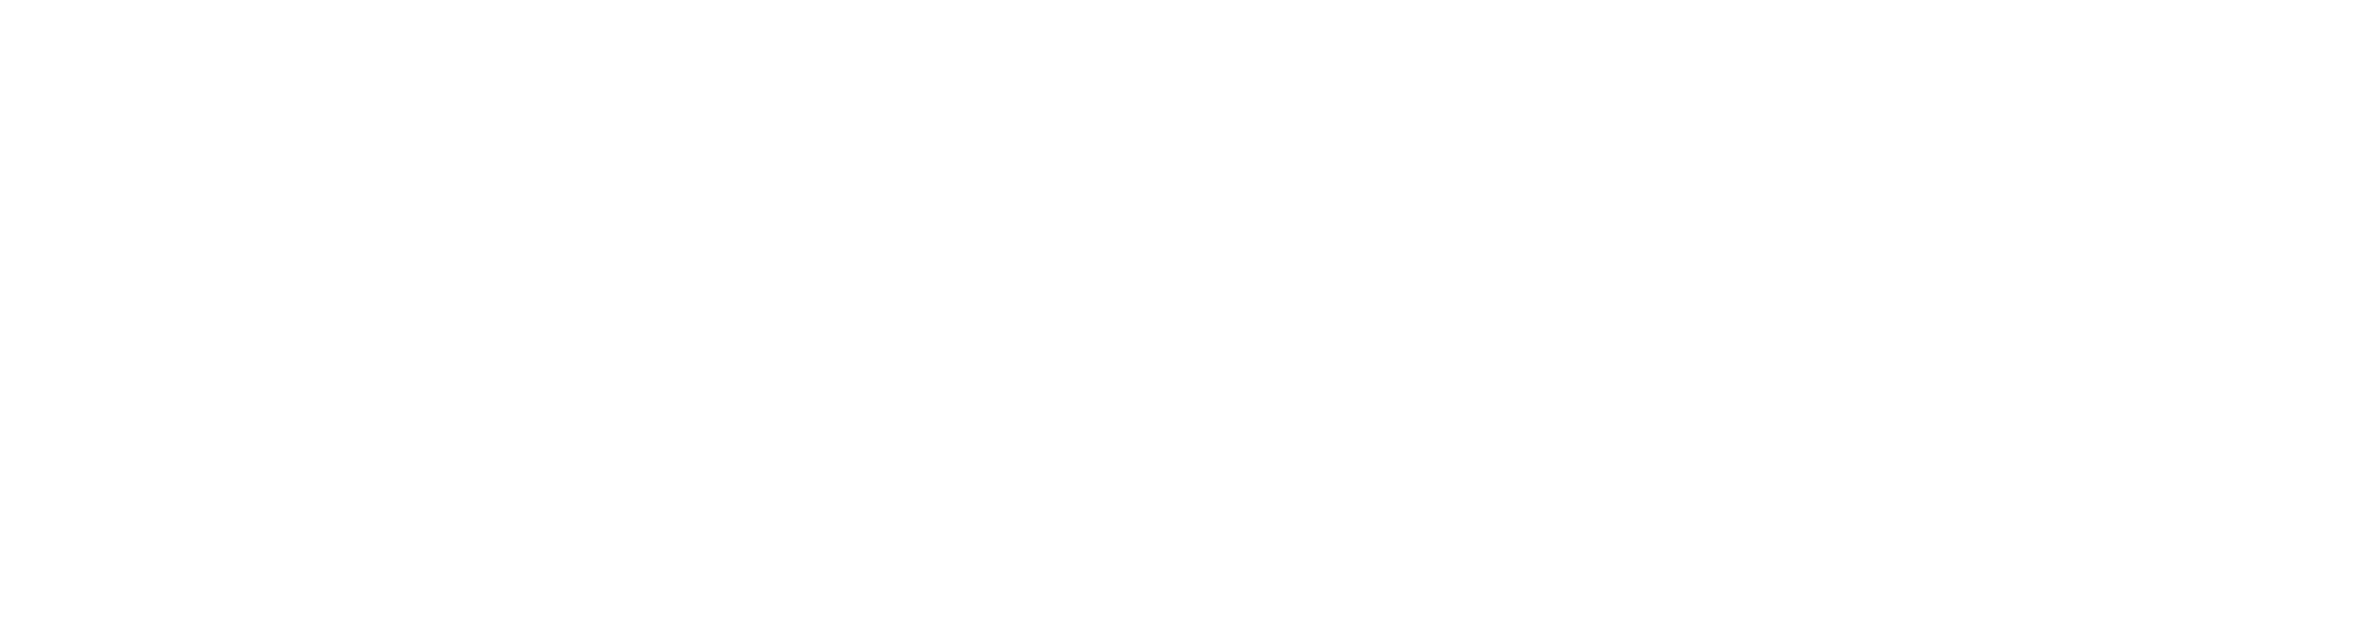 rational-logo.png